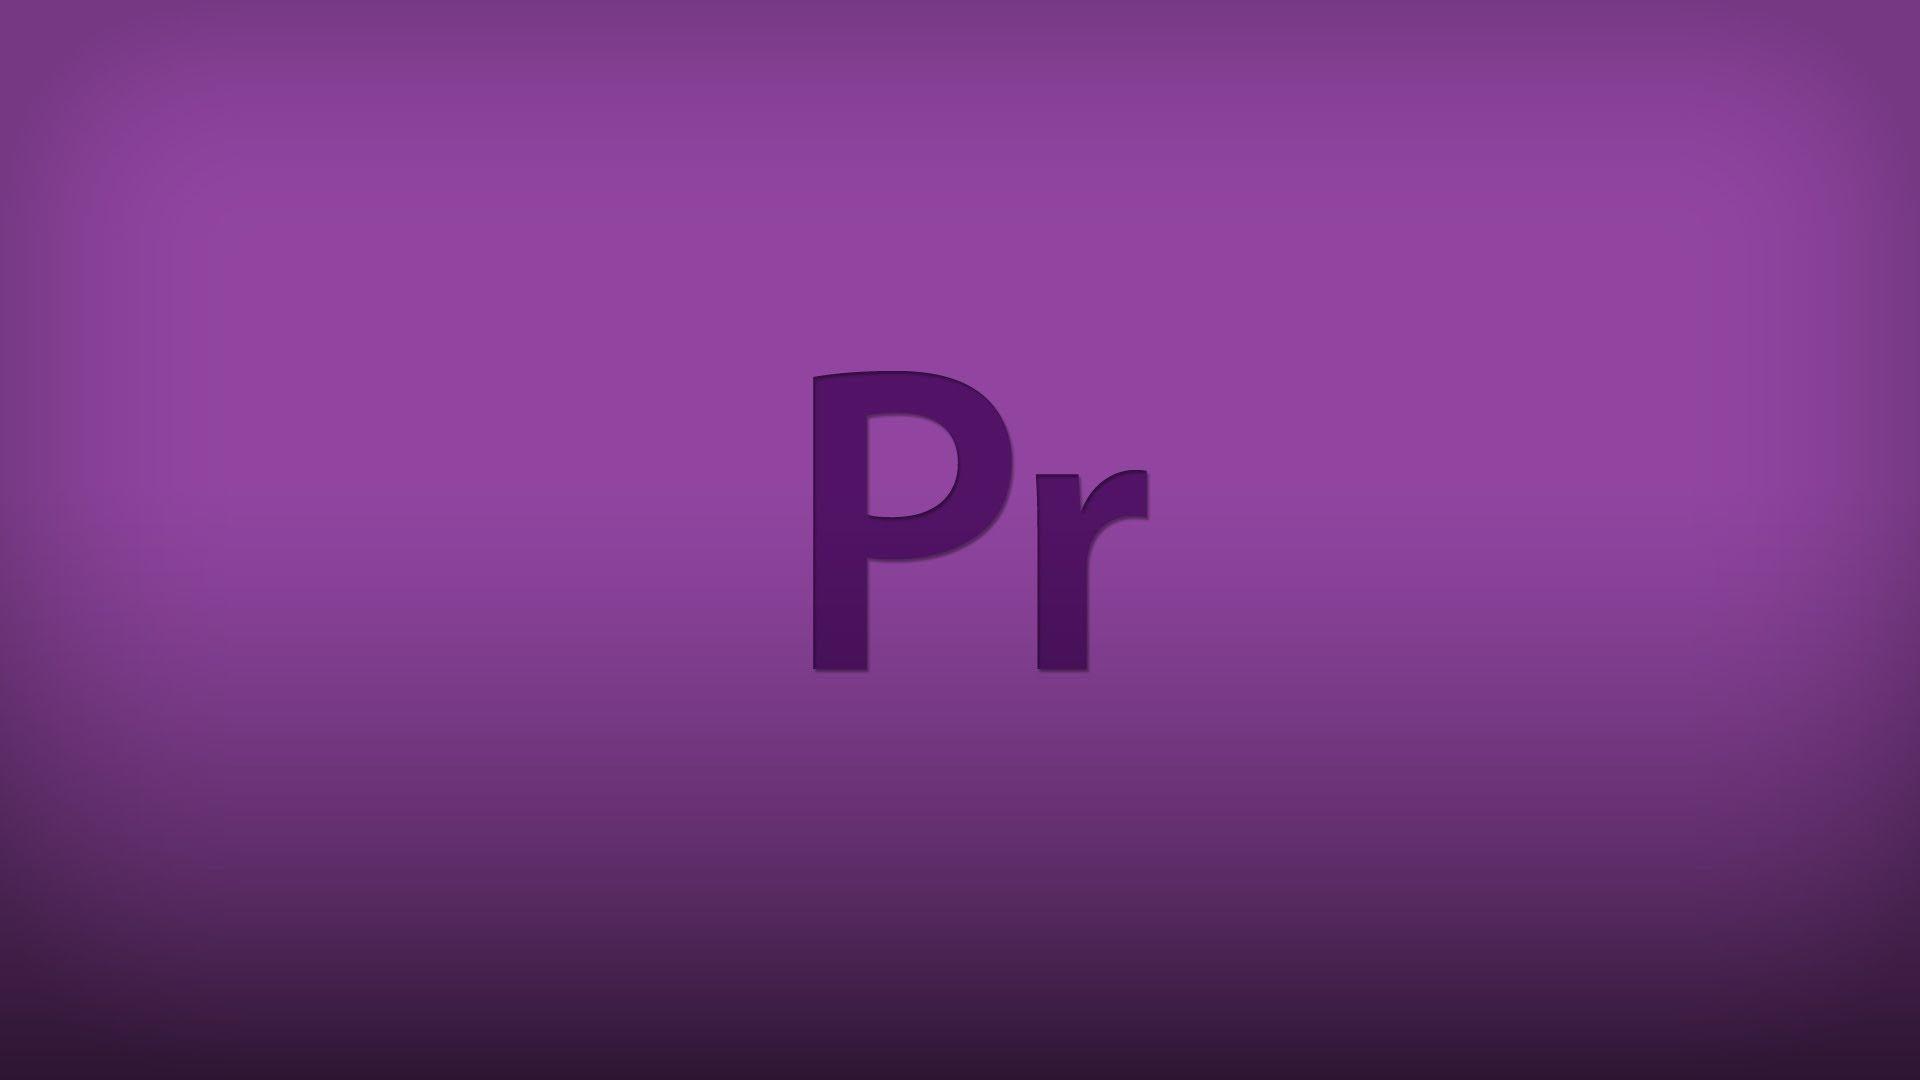 Adobe Premiere Pro Wallpaper. Hollywood Movie Premiere Wallpaper, Movie Premiere Background and Adobe Premiere Wallpaper